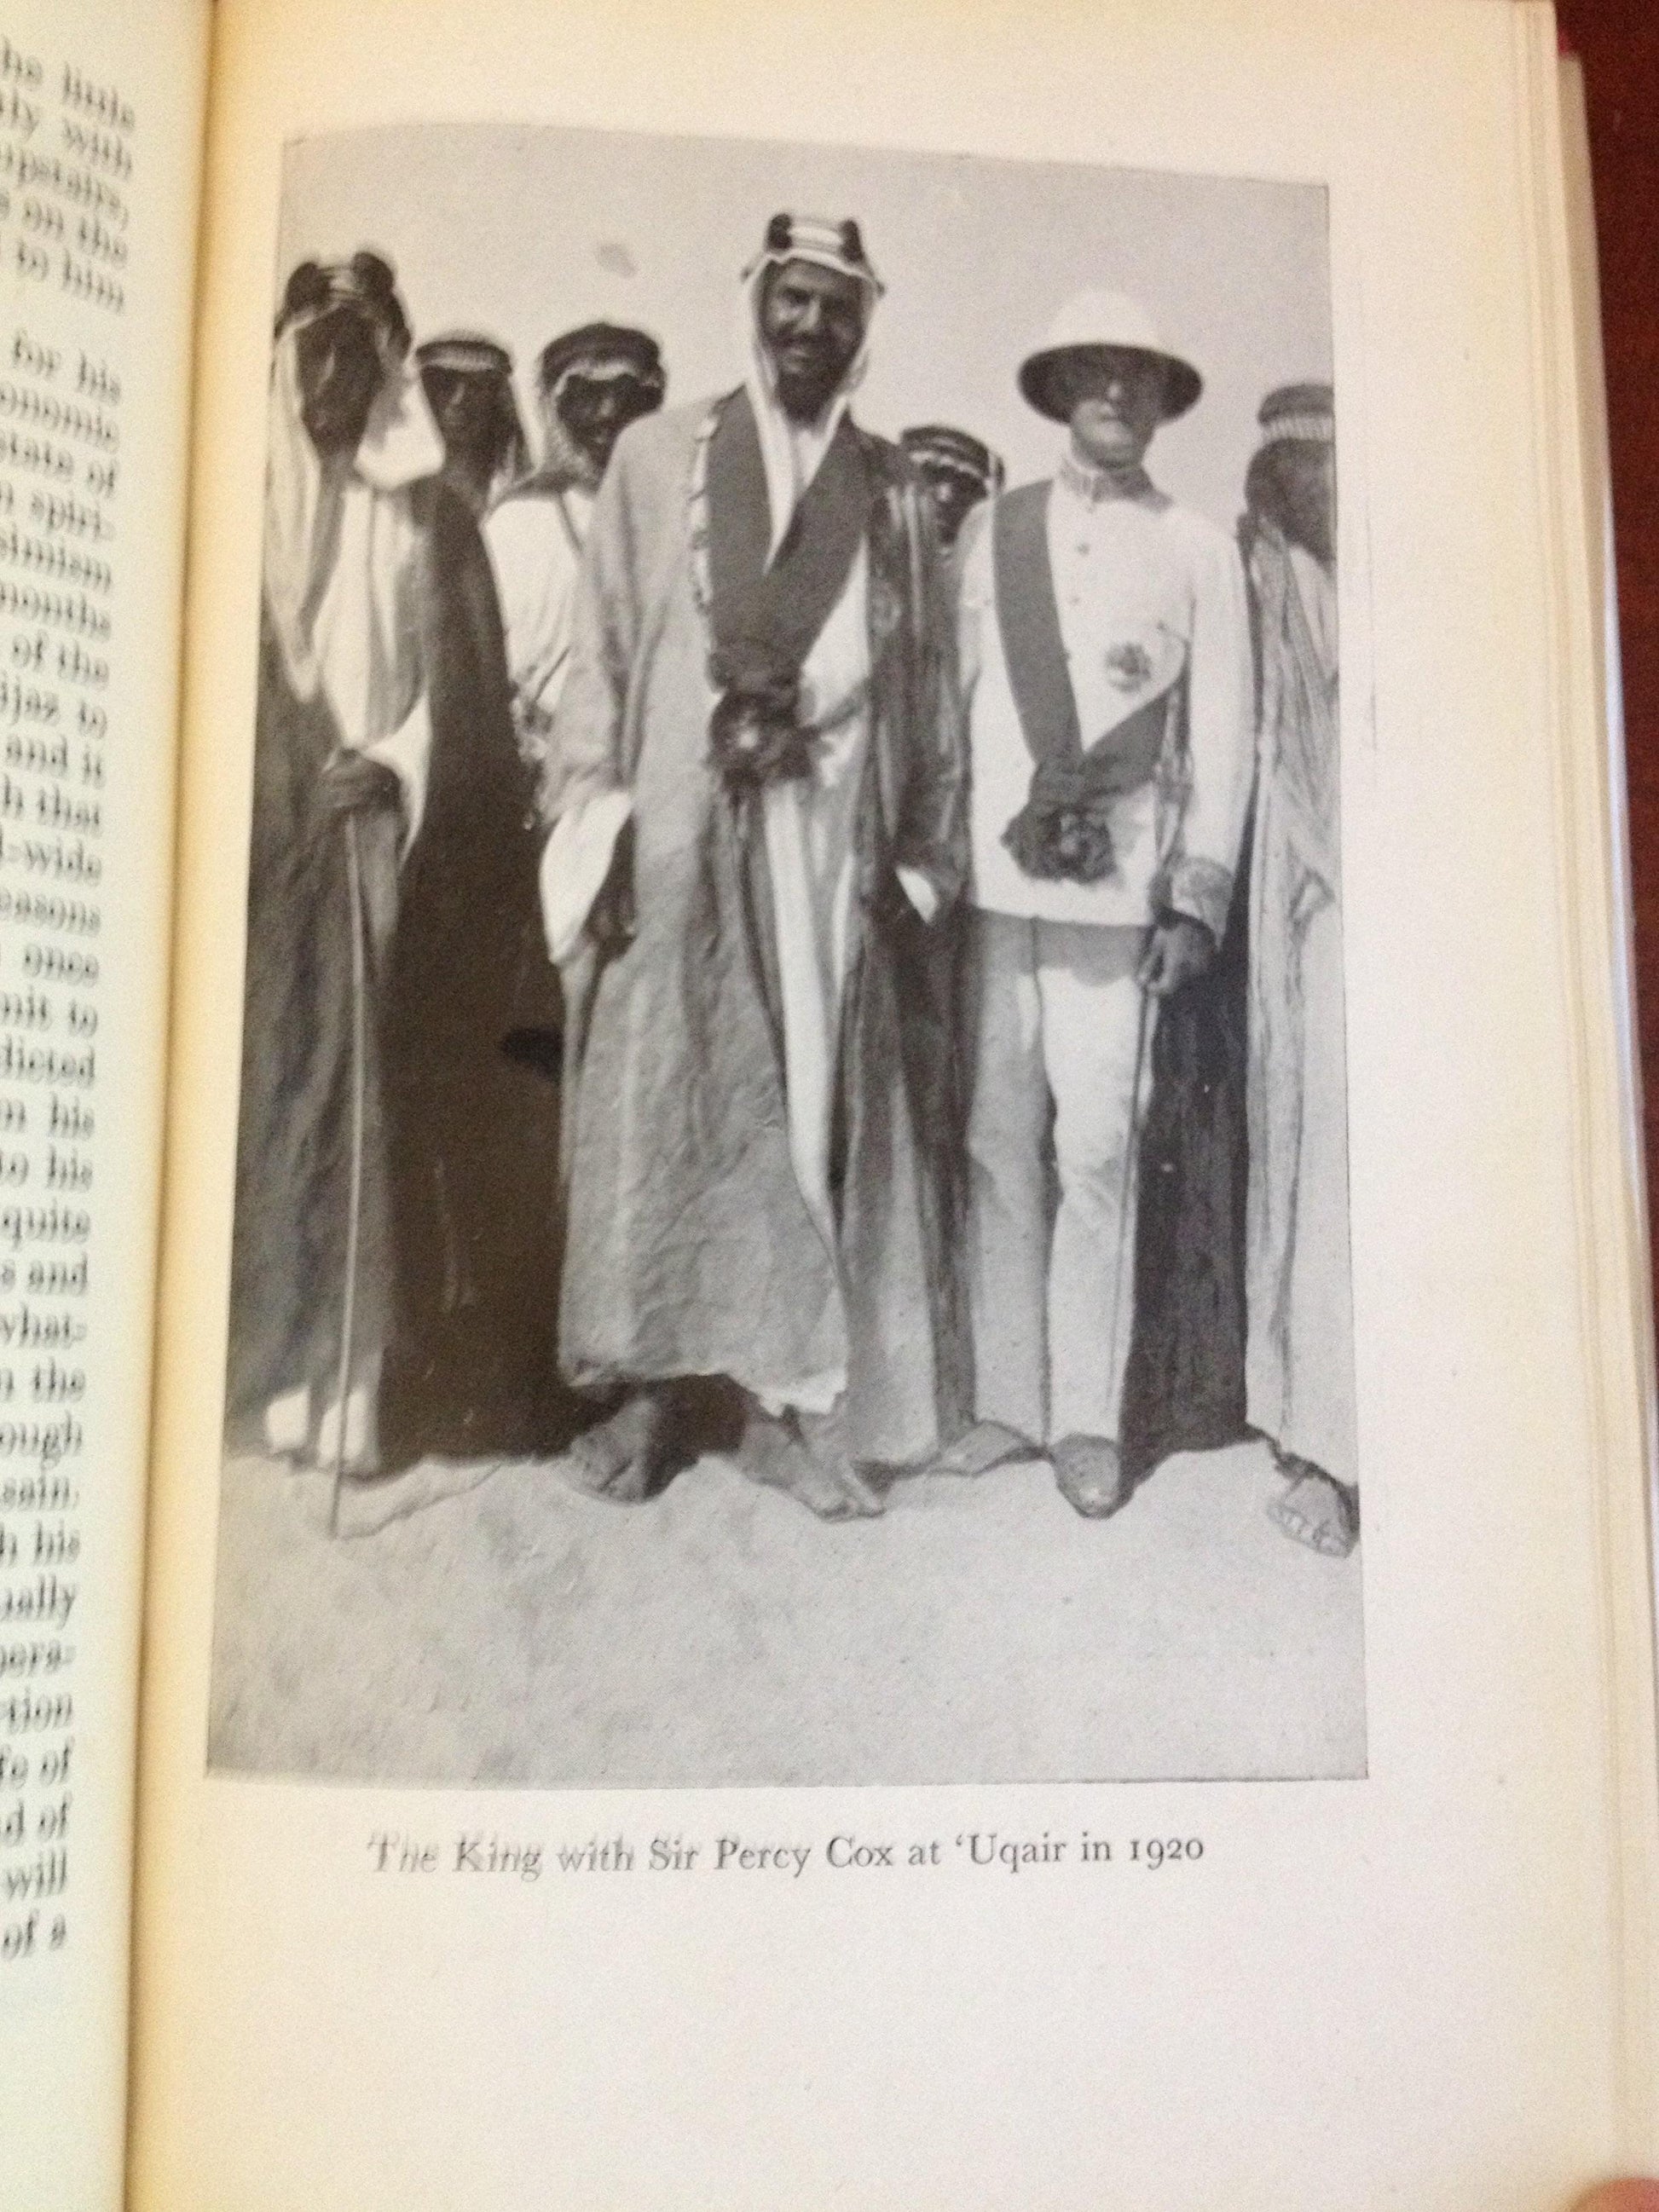 A PILGRIM IN ARABIA   BY: H. STJ. B PHILBY BooksCardsNBikes